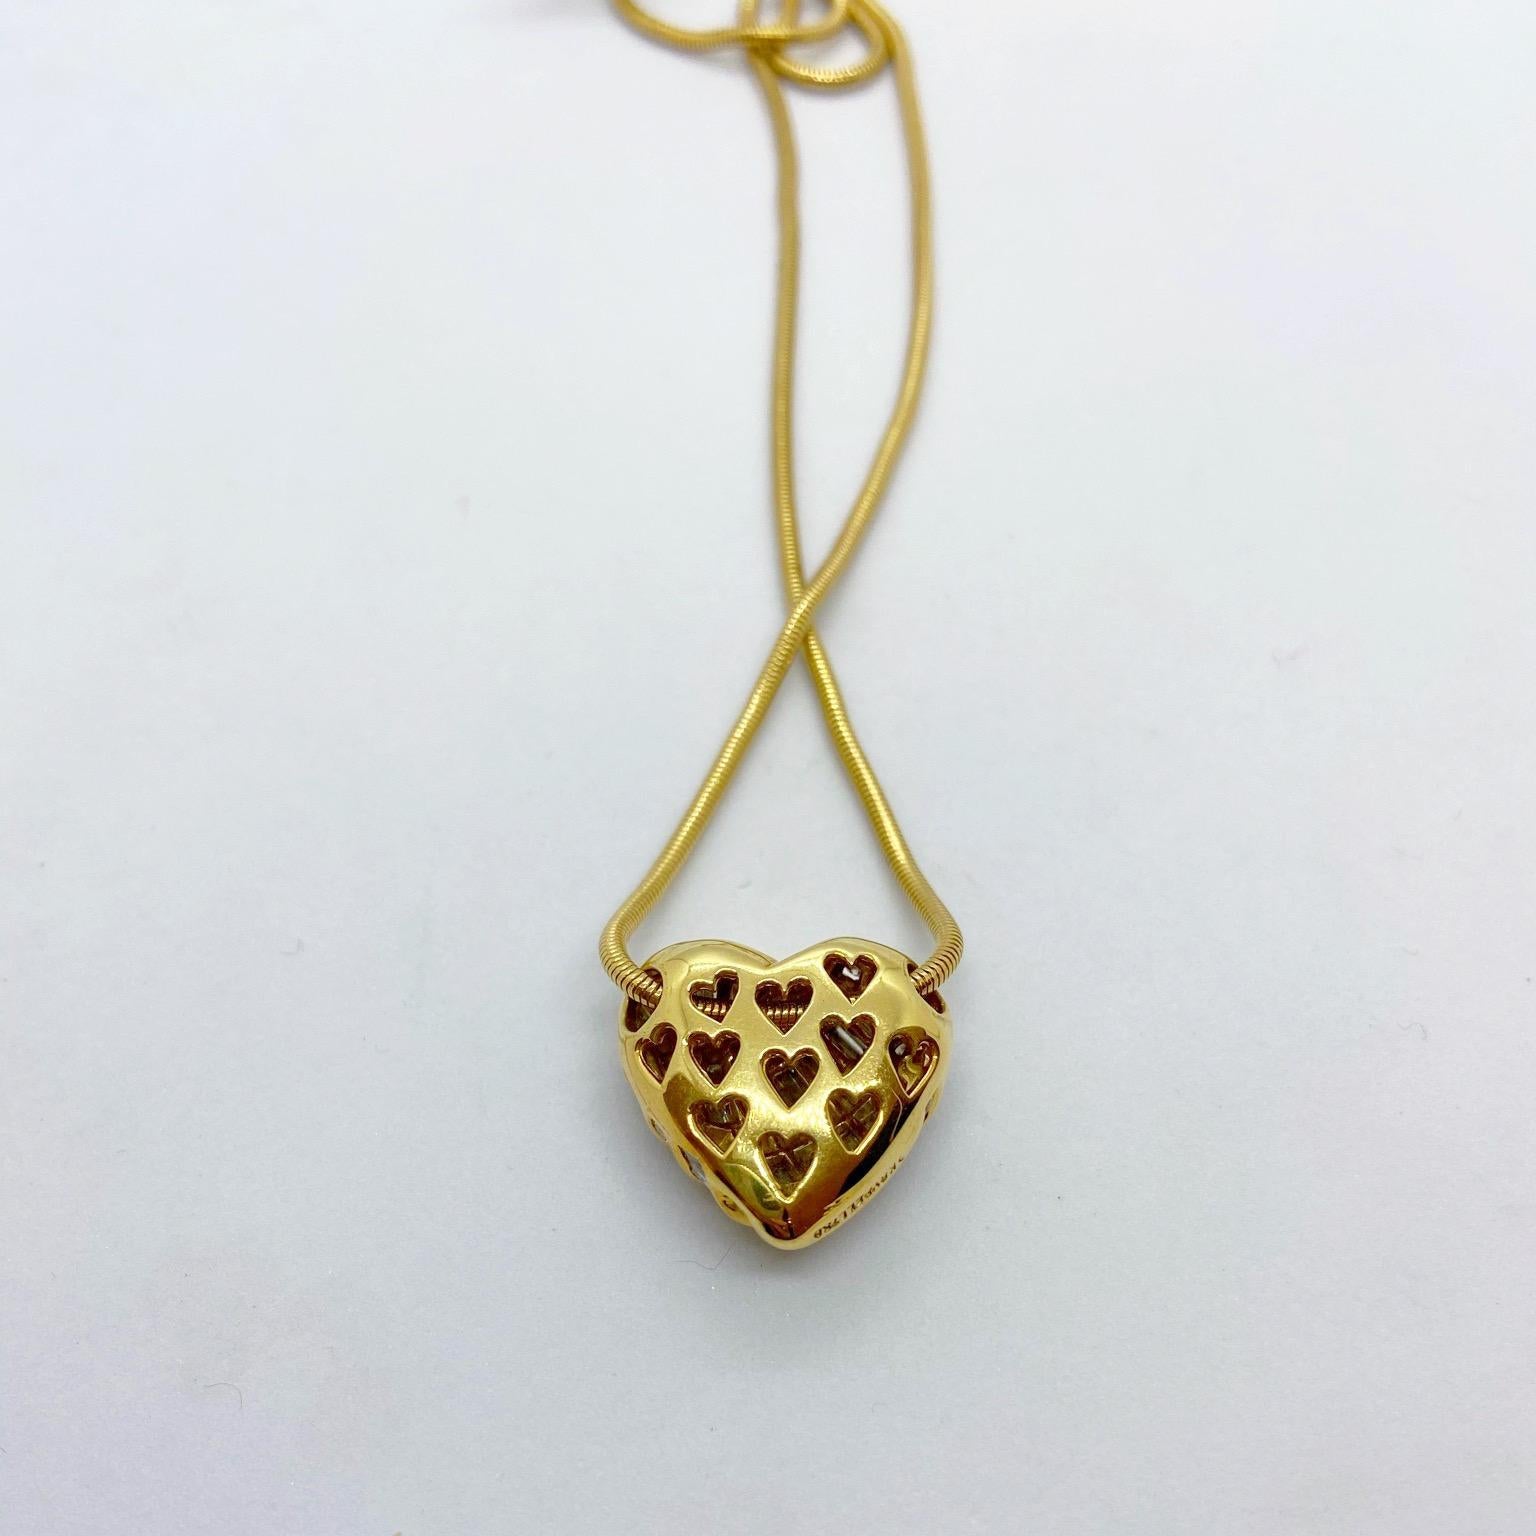 Baguette Cut Charles Krypell 18 Karat Yellow Gold, 2.21 Carat Diamond Heart Pendant For Sale